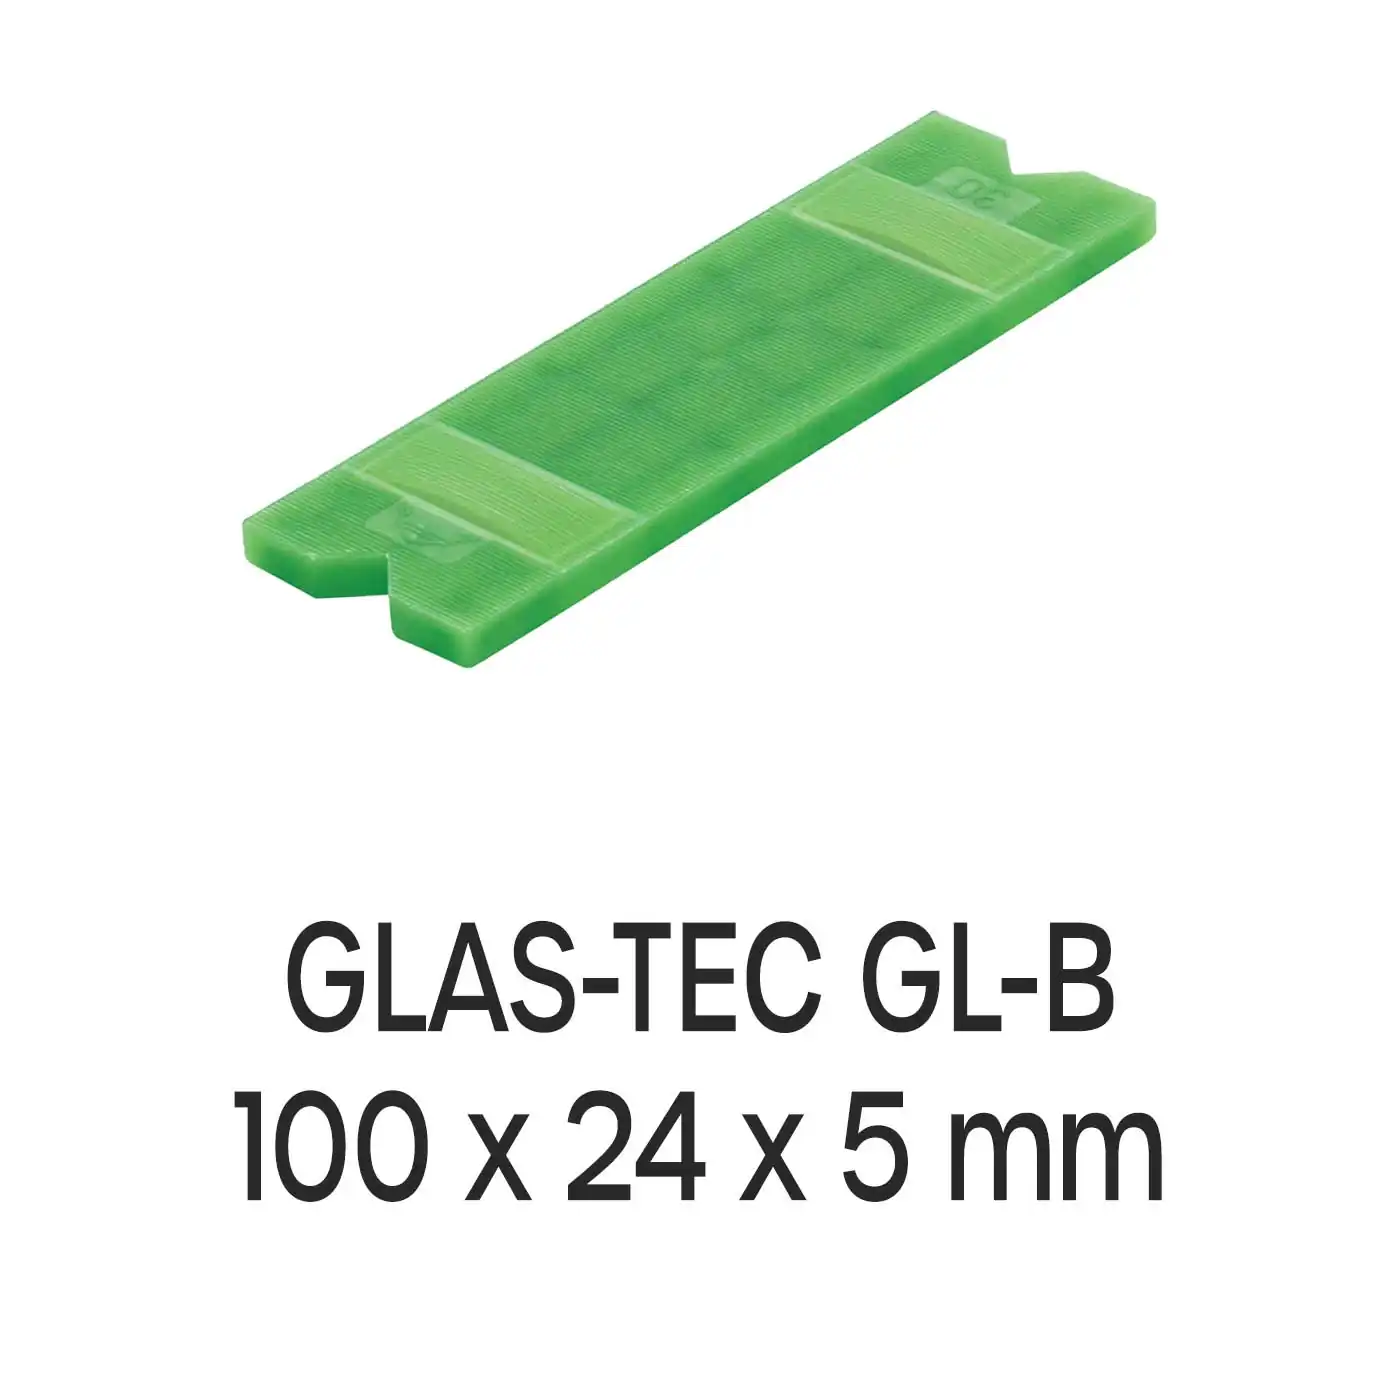 Roto GLAS-TEC GL-B 100 x 24 x 5 mm Verglasungsklötze 1000 Stück